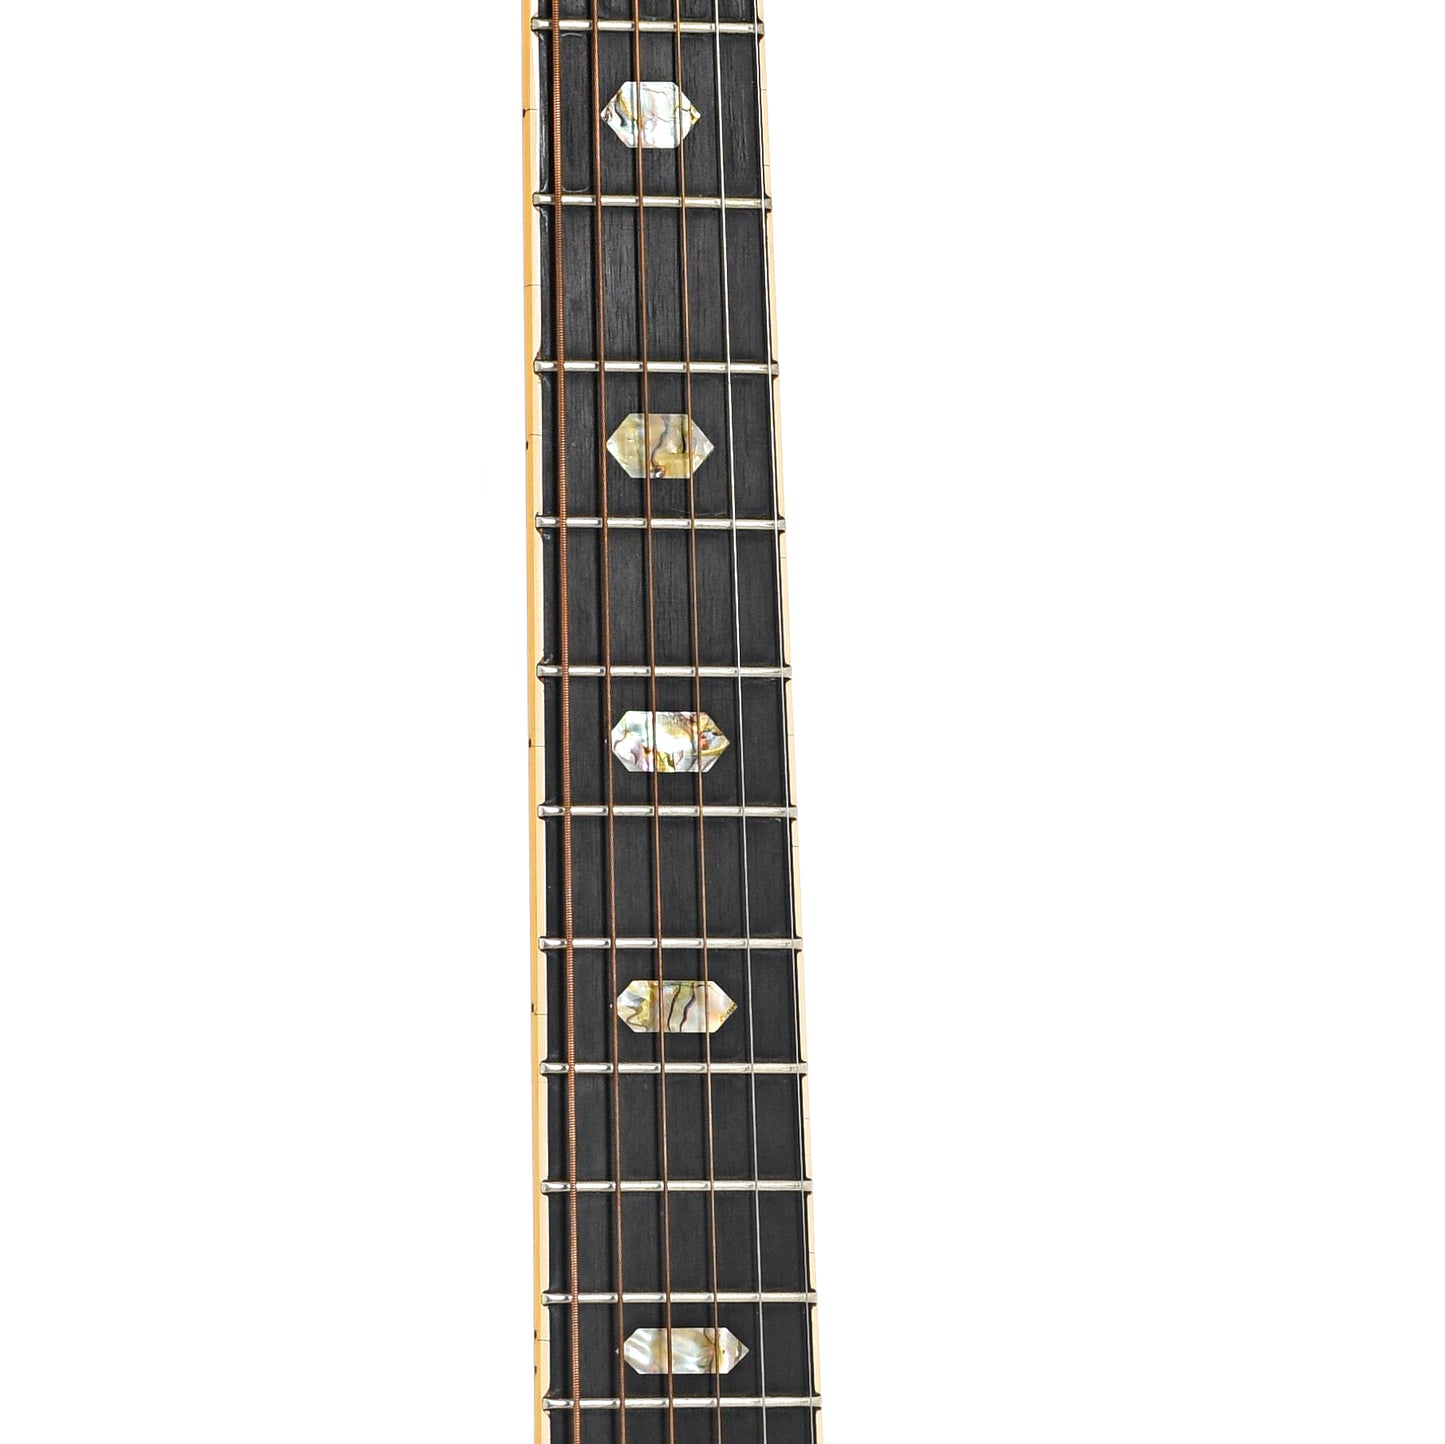 Fretboard of Martin D-41 Acoustic Guitar (1999)